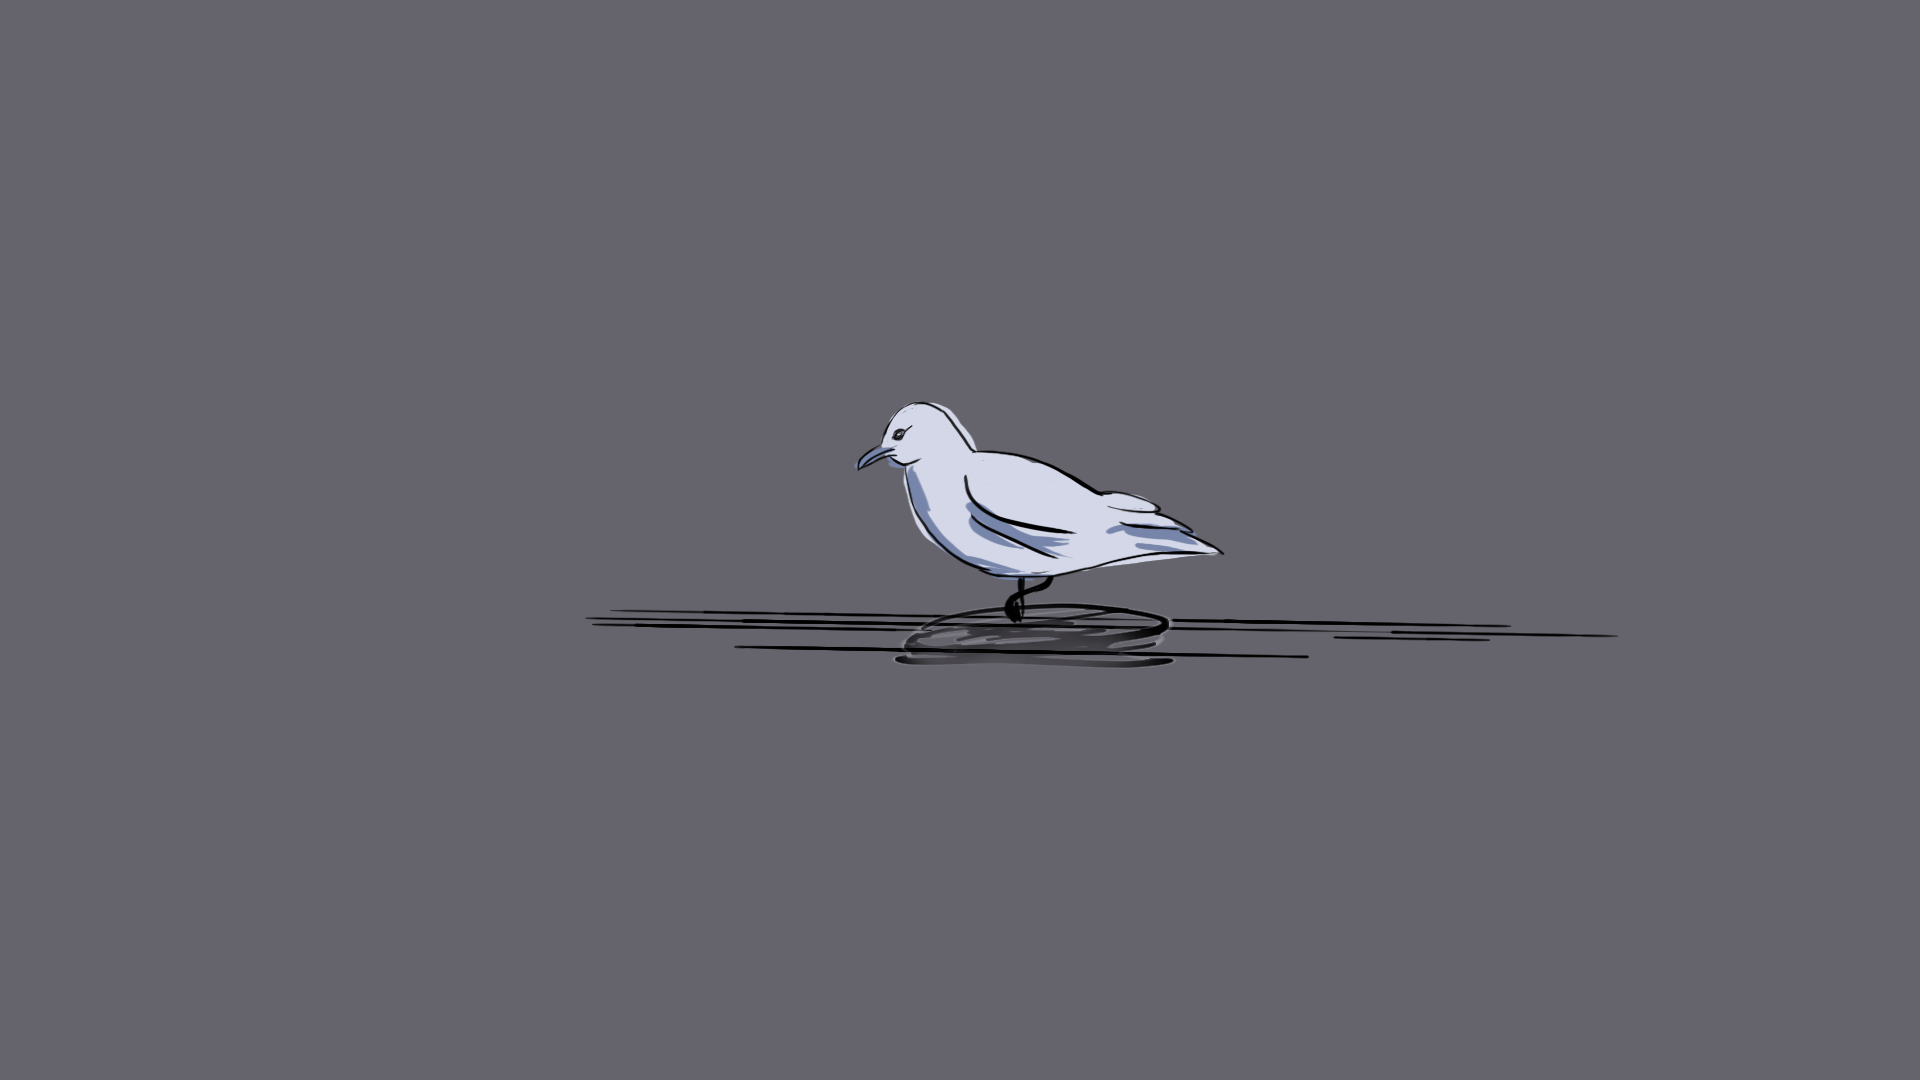 Flying Bird Animation by WarOfMyArt on DeviantArt